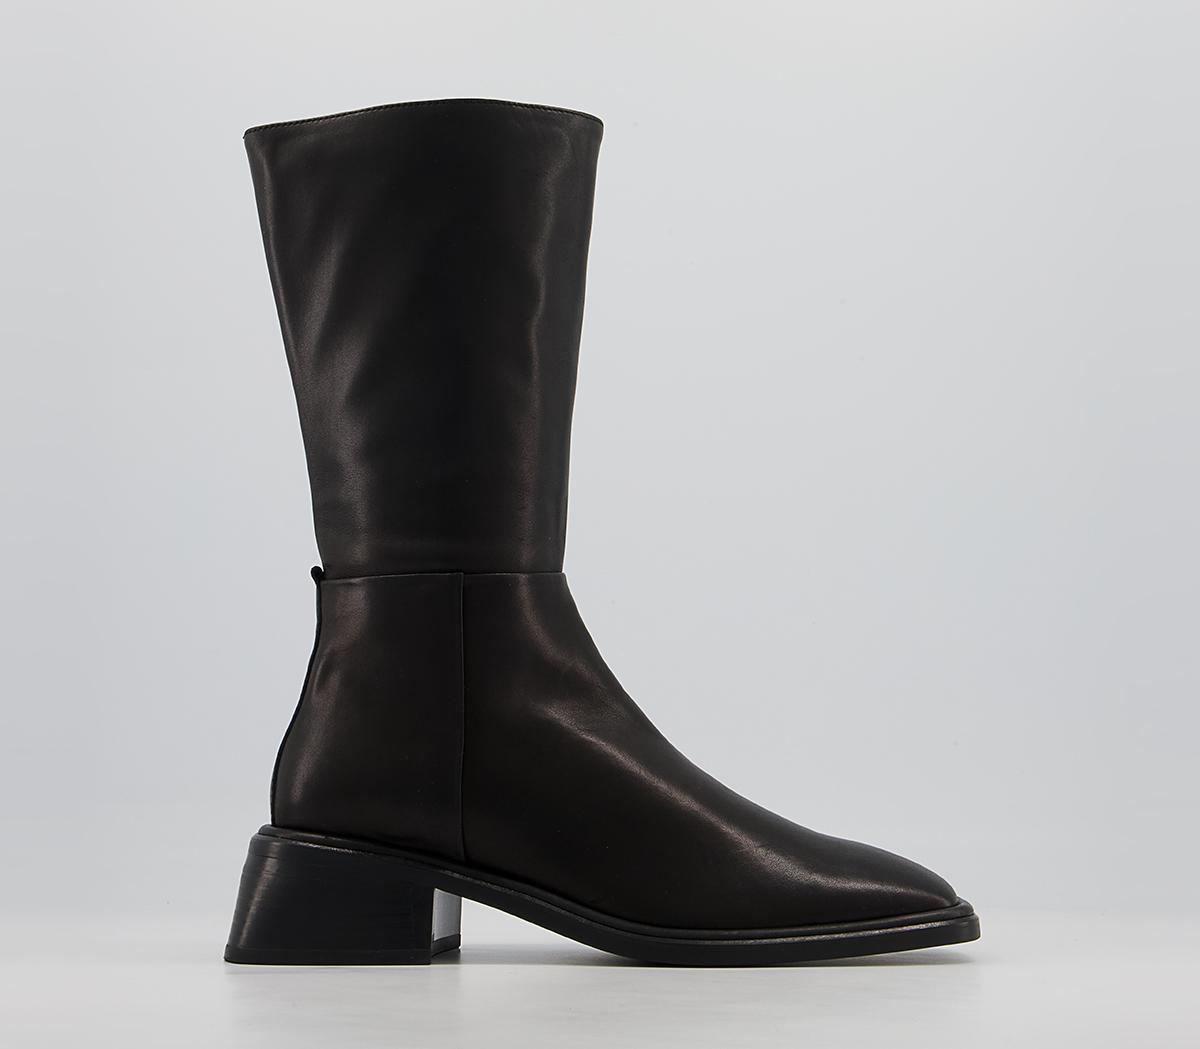 Atelier by Vagabond Neema Tall Boots Black - Women's Boots